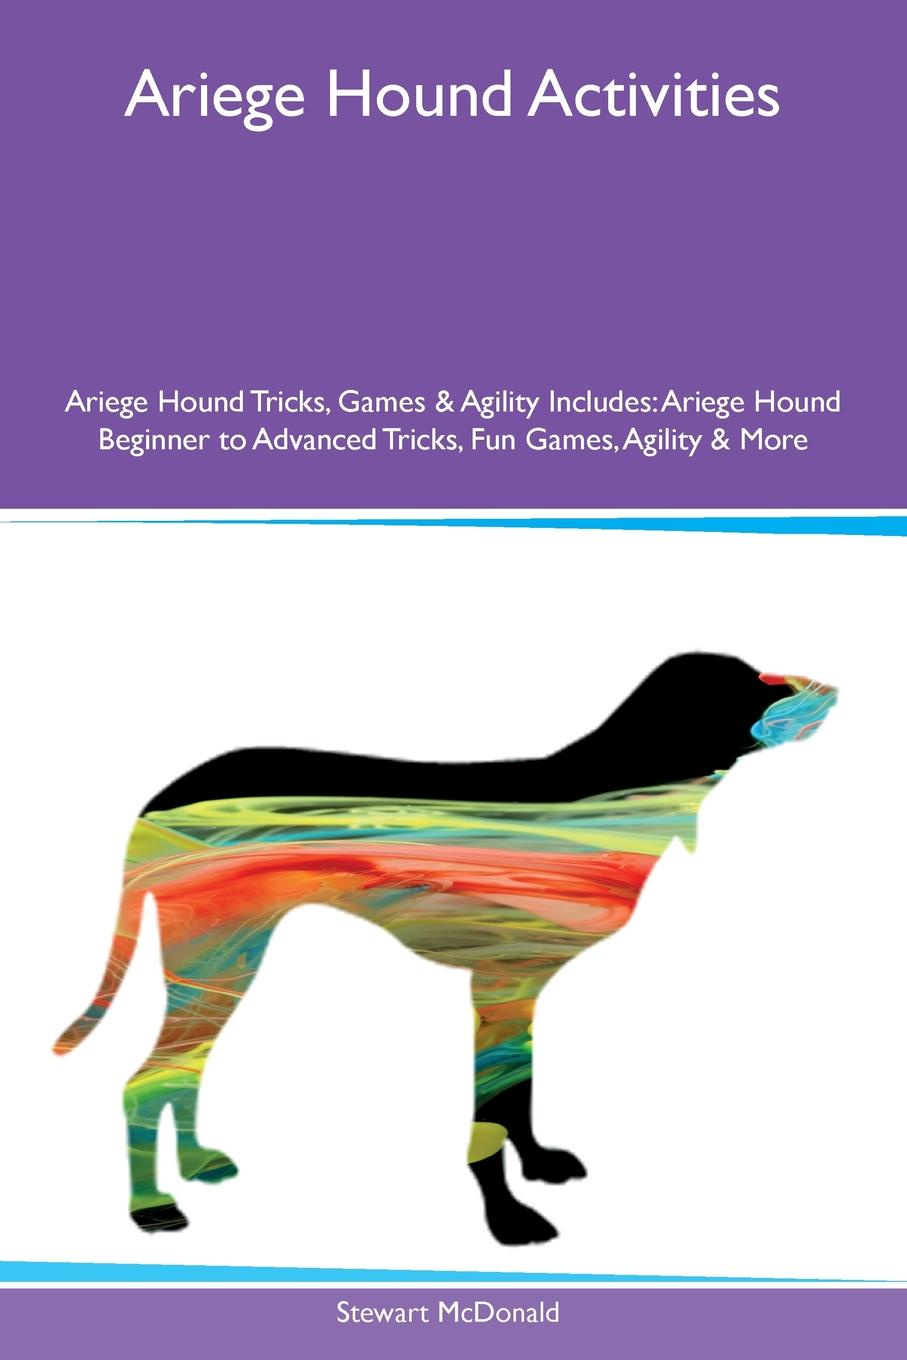 Ariege Hound Activities Ariege Hound Tricks, Games & Agility Includes. Ariege Hound Beginner to Advanced Tricks, Fun Games, Agility & More